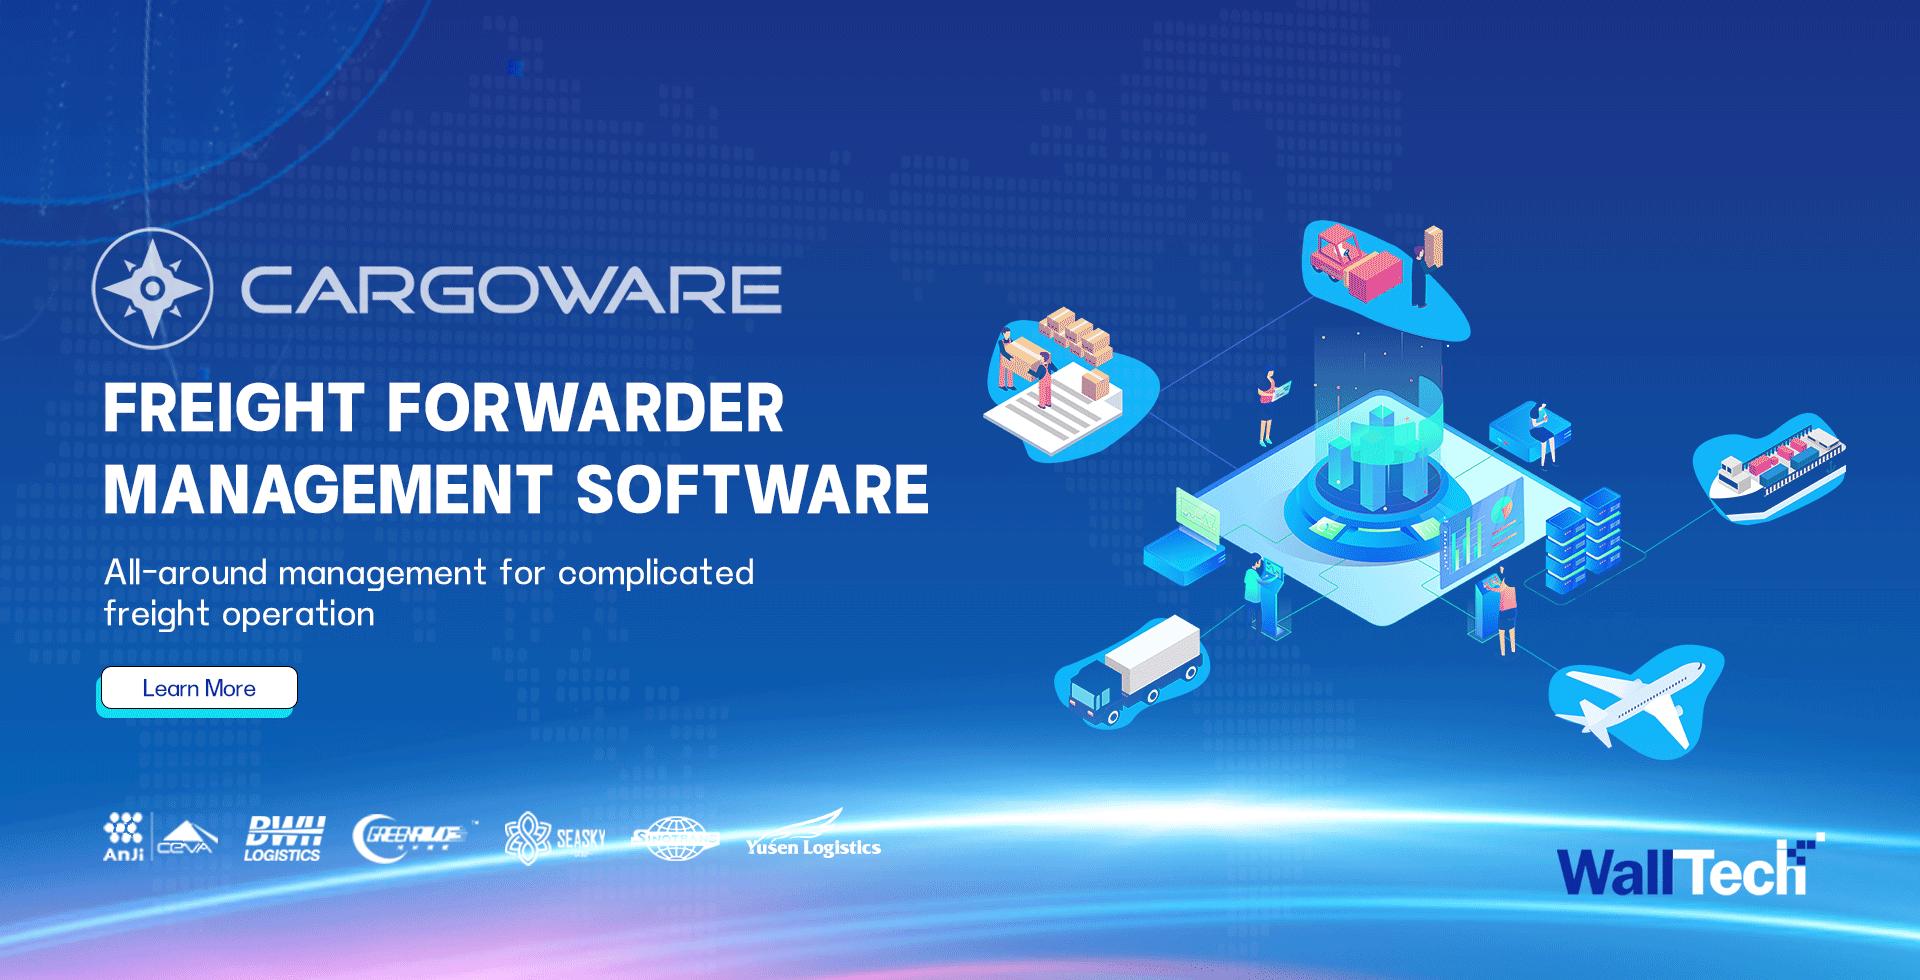 Cargoware Freight Forwarder Management Software